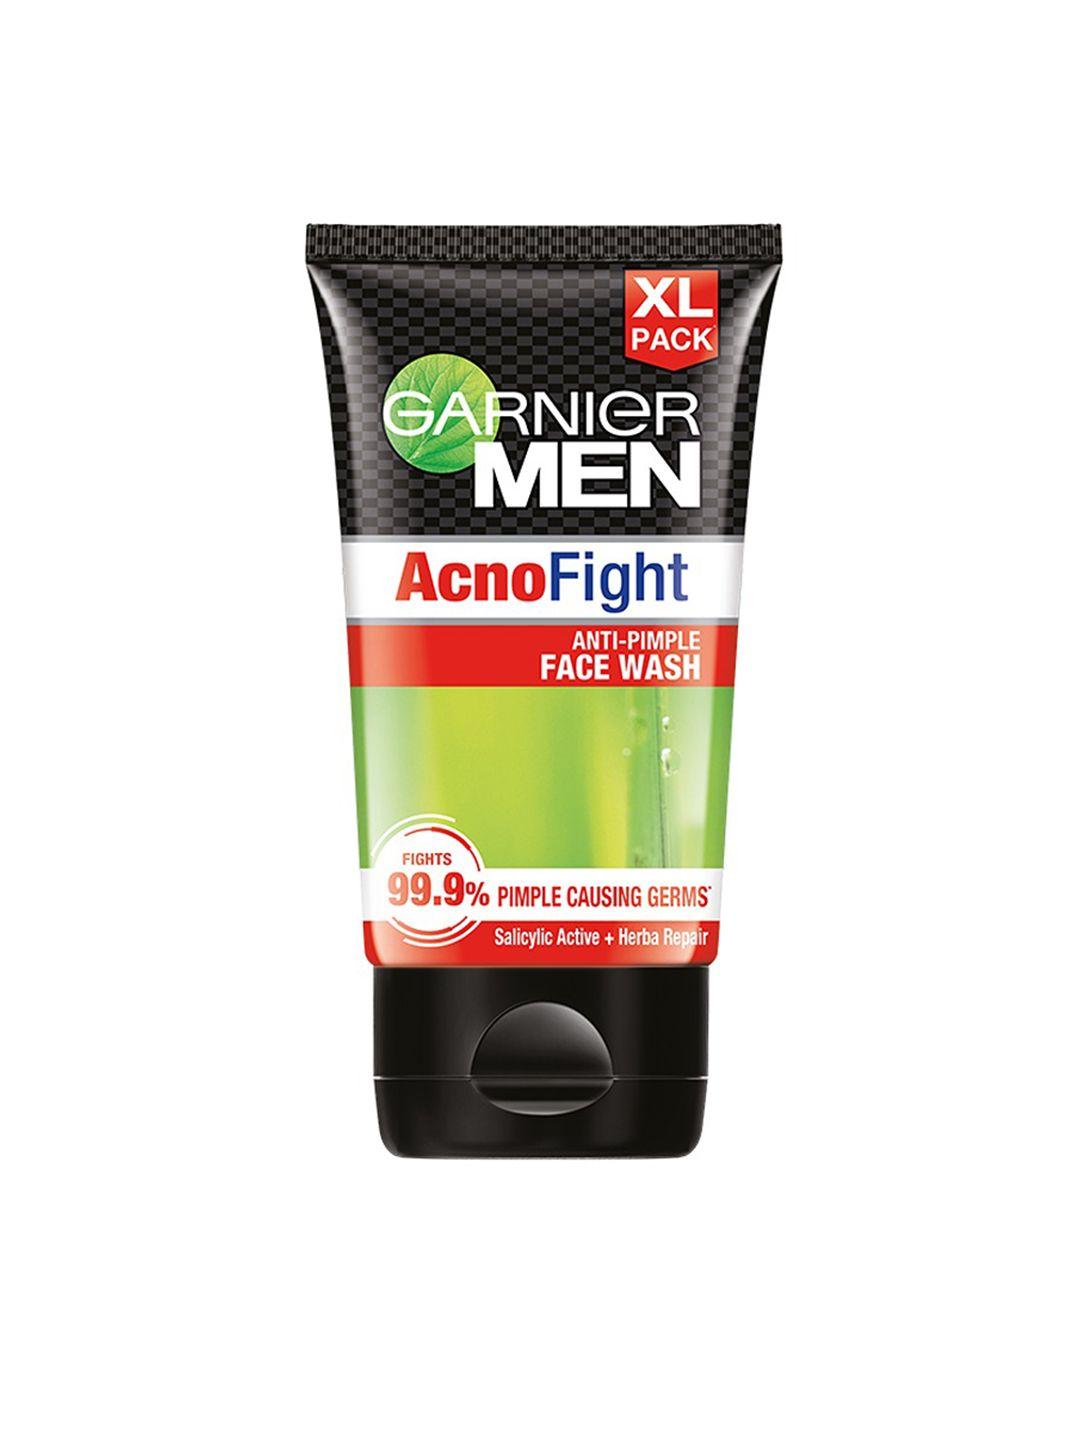 garnier men acno fight anti-pimple for acne prone skin facewash 150g